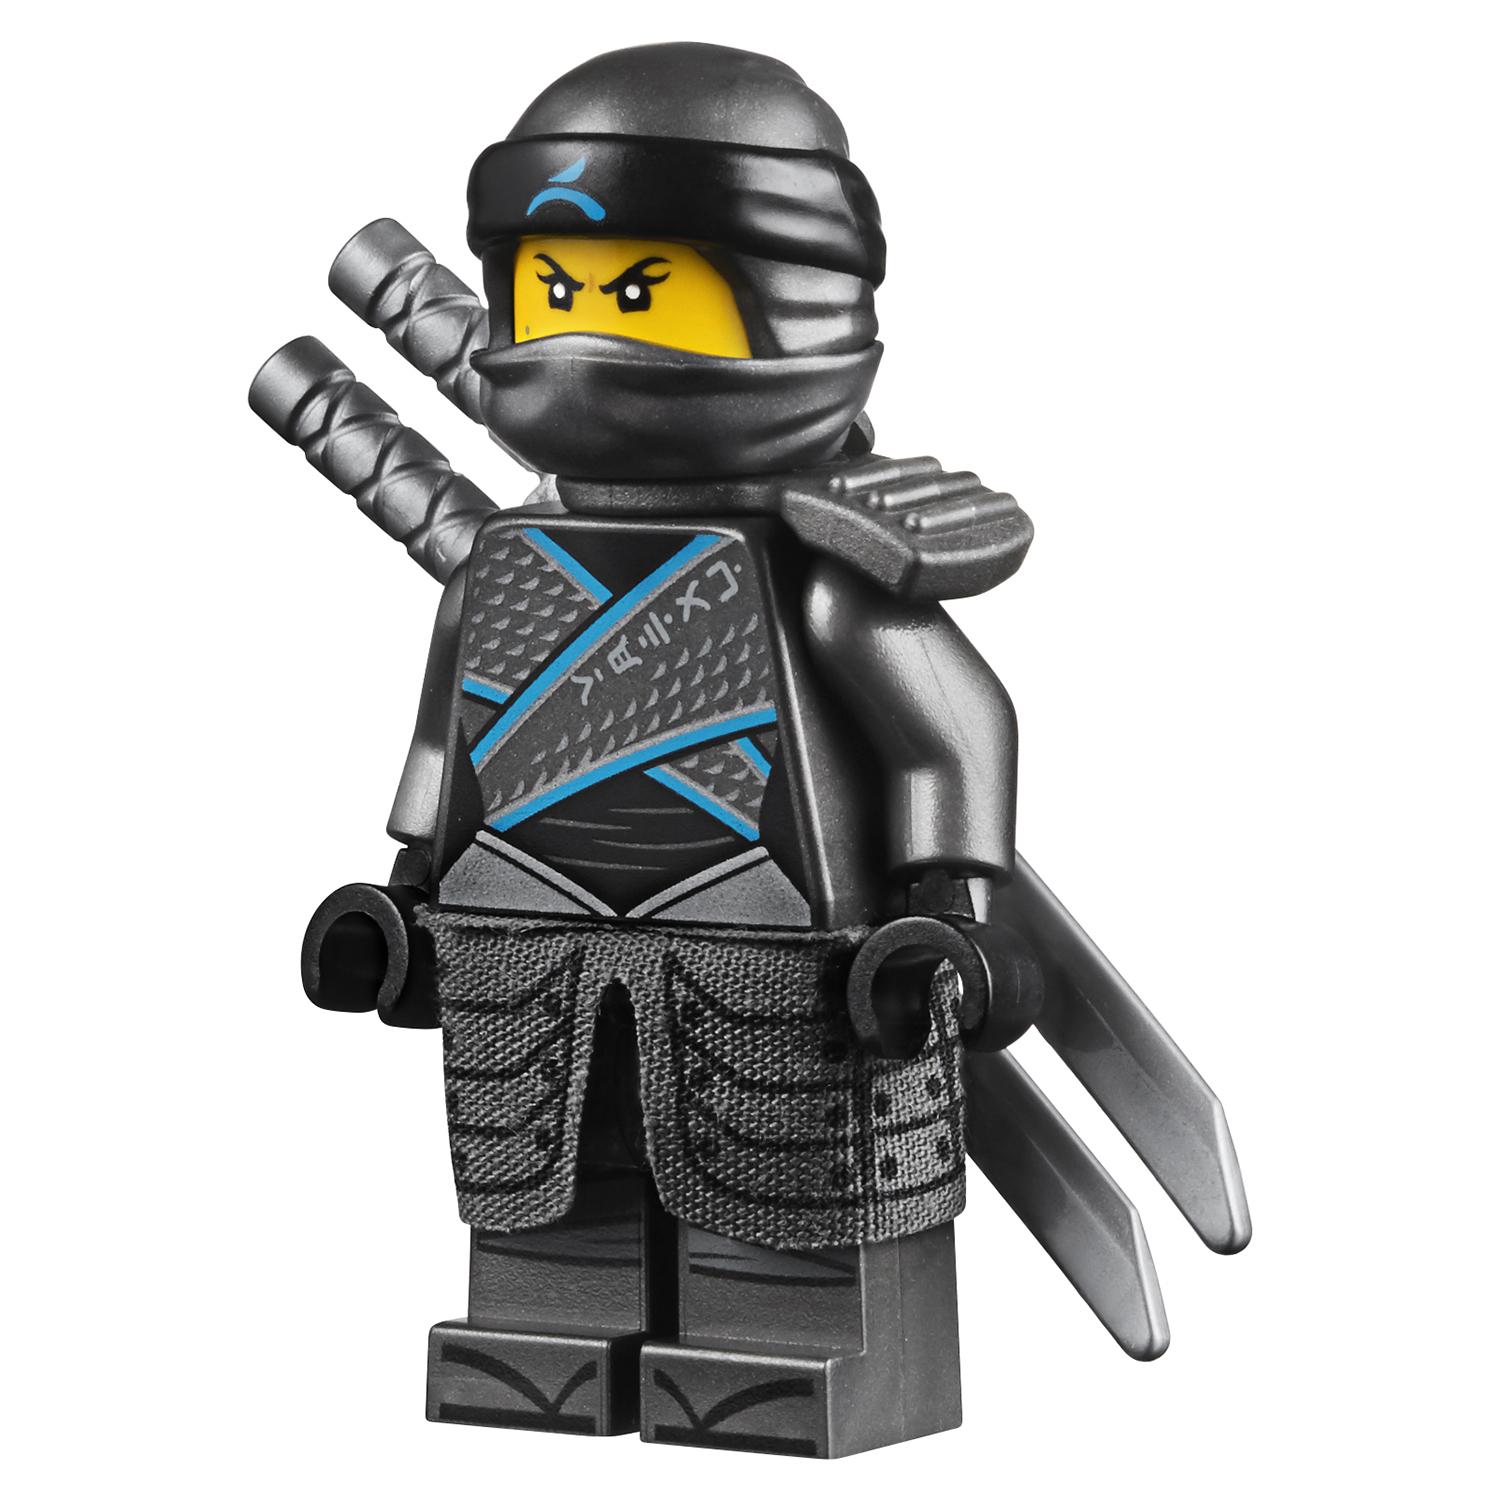 Lego Ninjago 70641 Ночной вездеход ниндзя